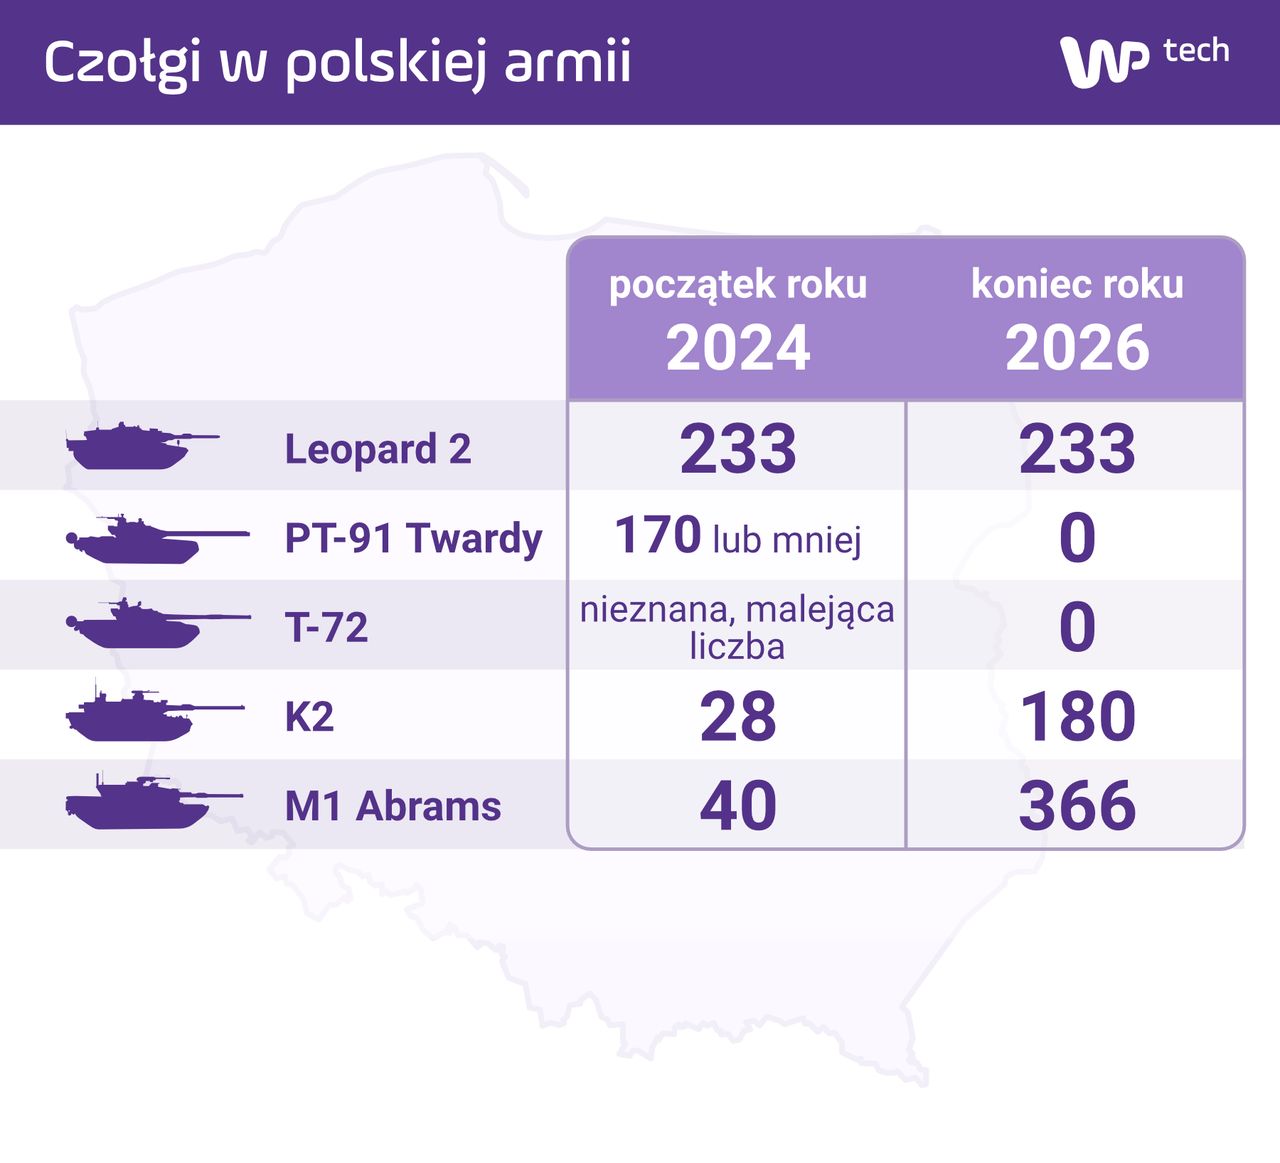 Polska stopniowo rozbudowuje i modernizuje swoje siły pancerne